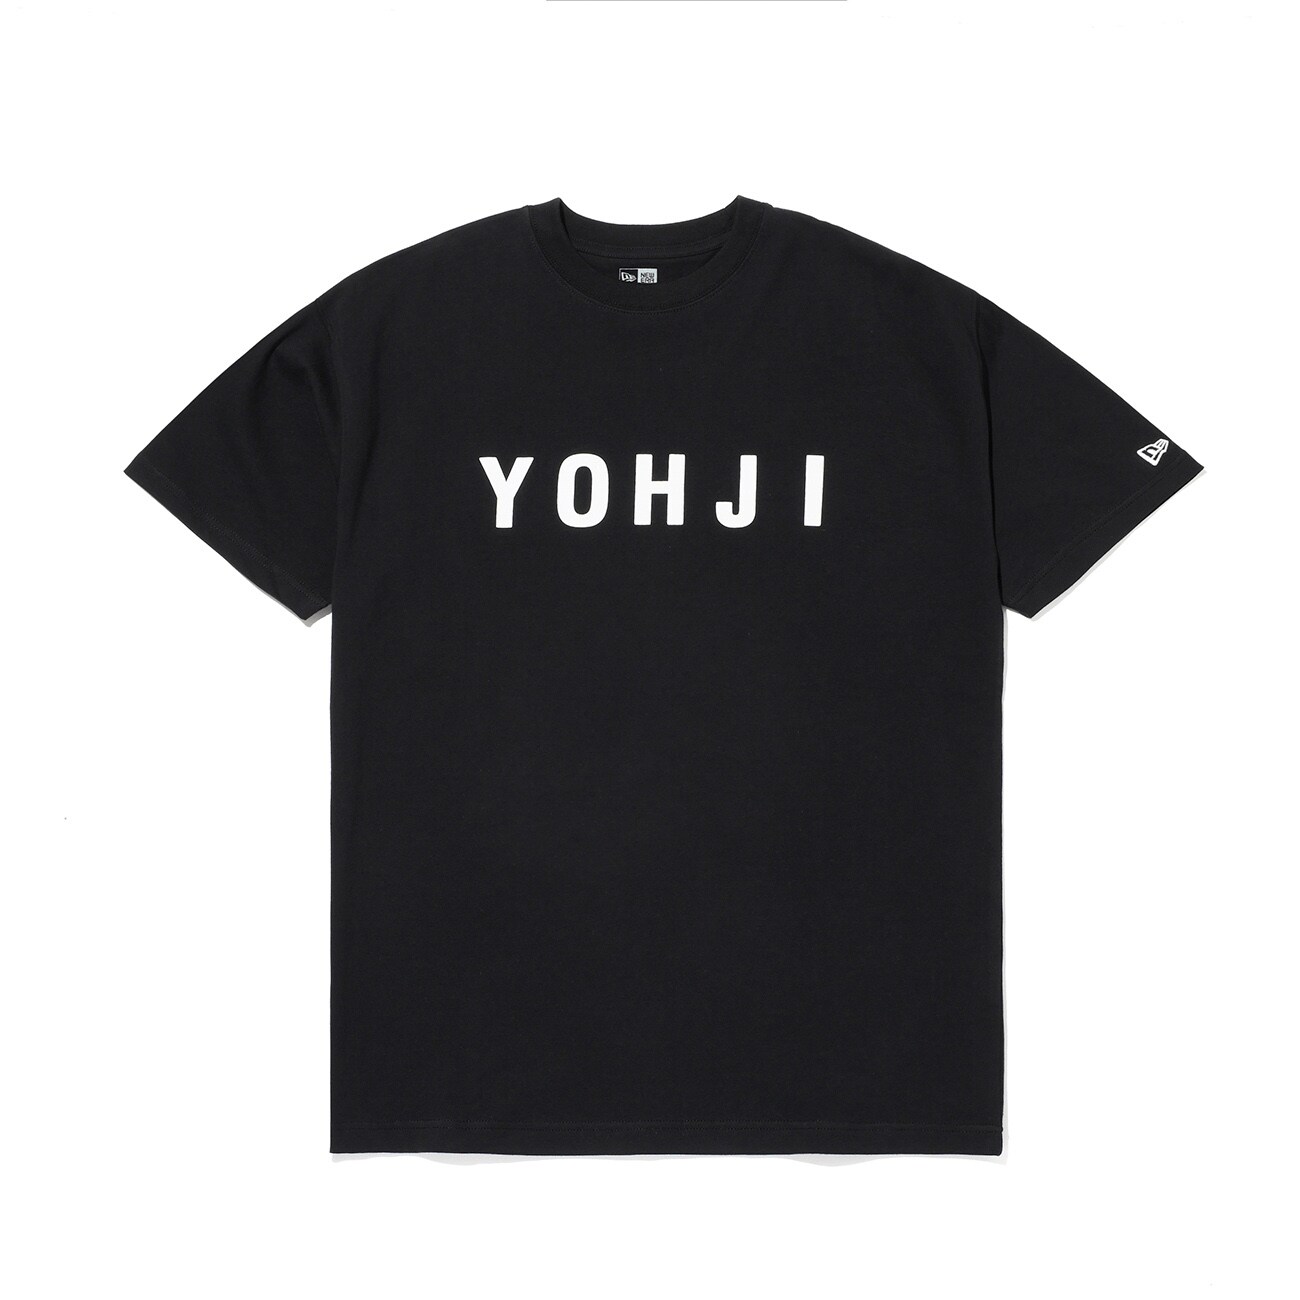 Yohji Yamamoto×New Era BLOCK TYPEFACE <YOHJI> PRINT SHORT SLEEVES